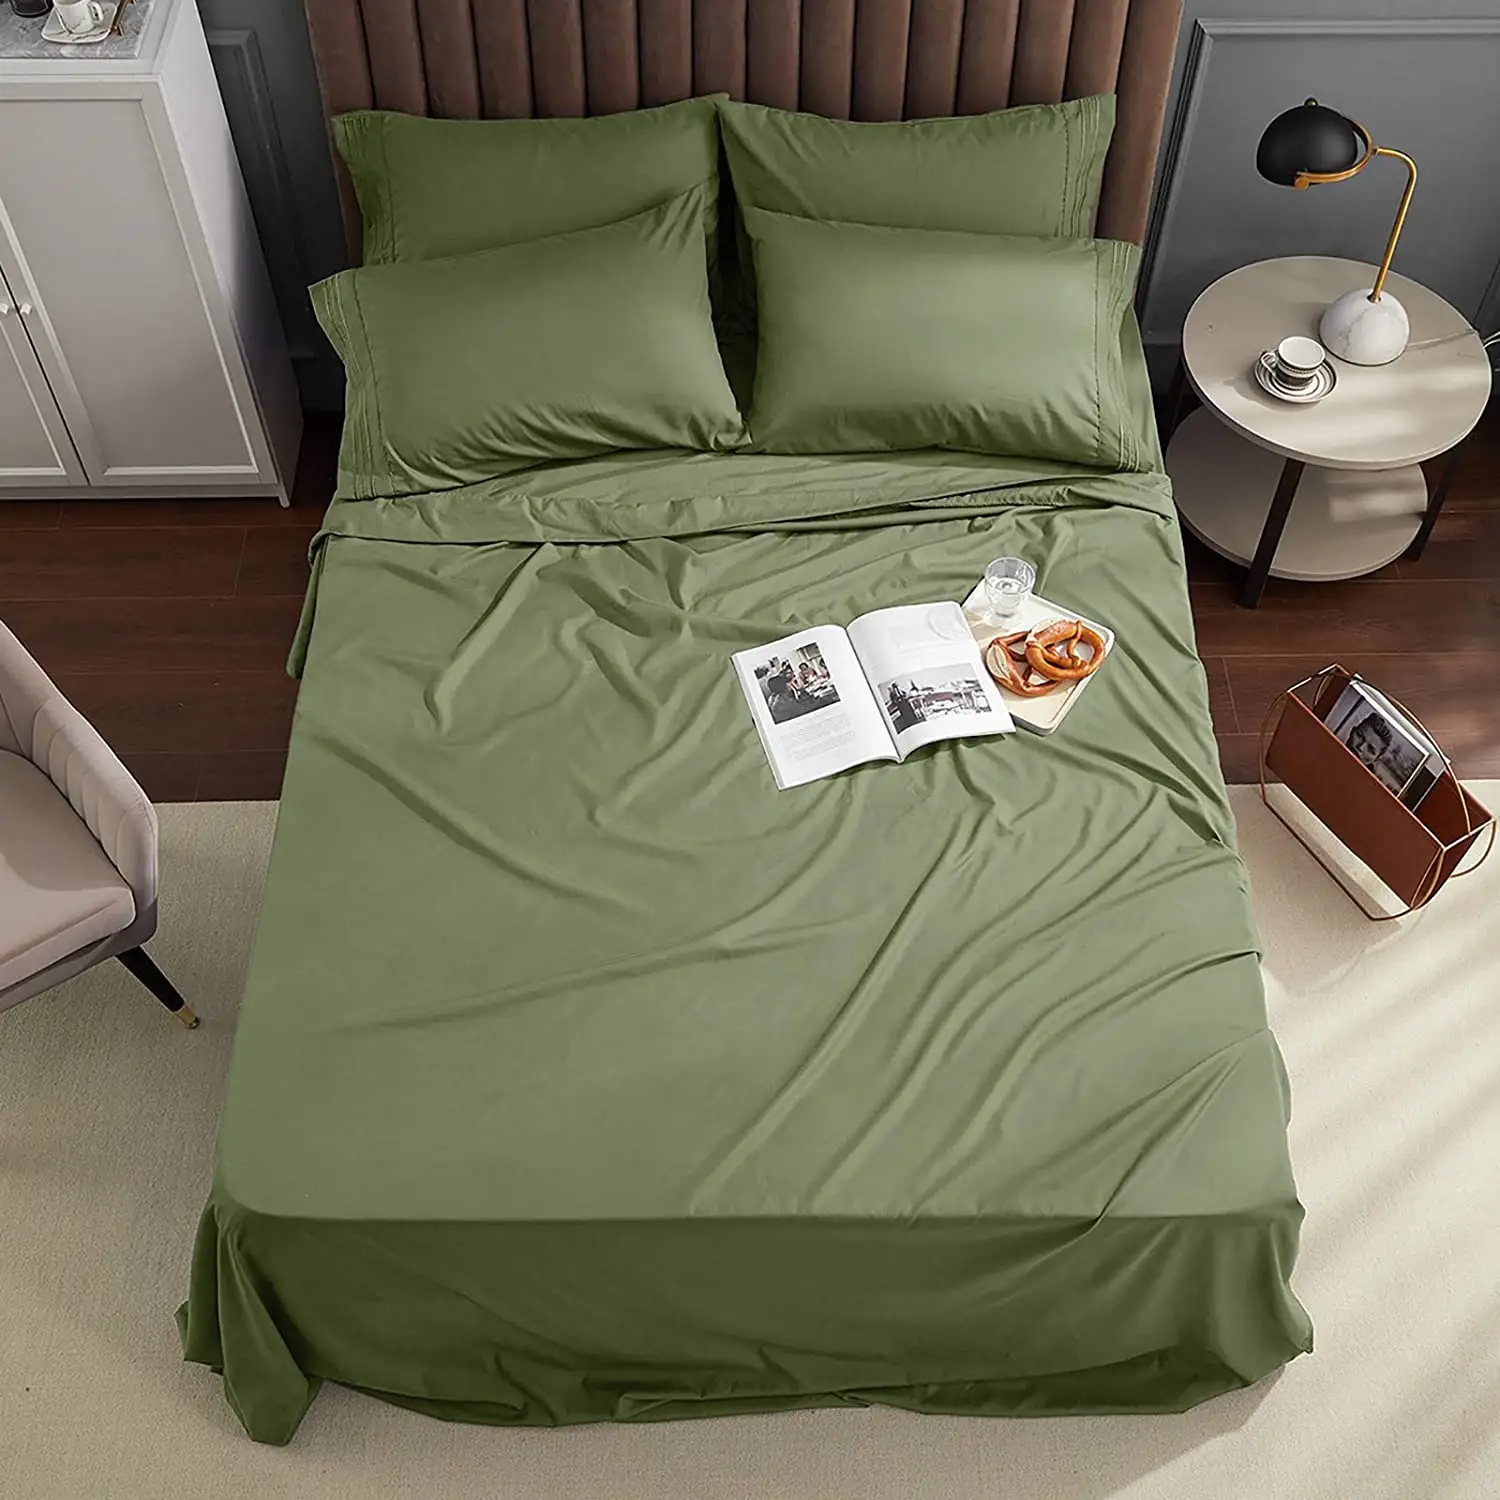 Green Bed Sheet Sets 1800 Thread Count Sabanas Deep Pocket Juegos De Sabana Online New Born Bedding Set King Queen Designer